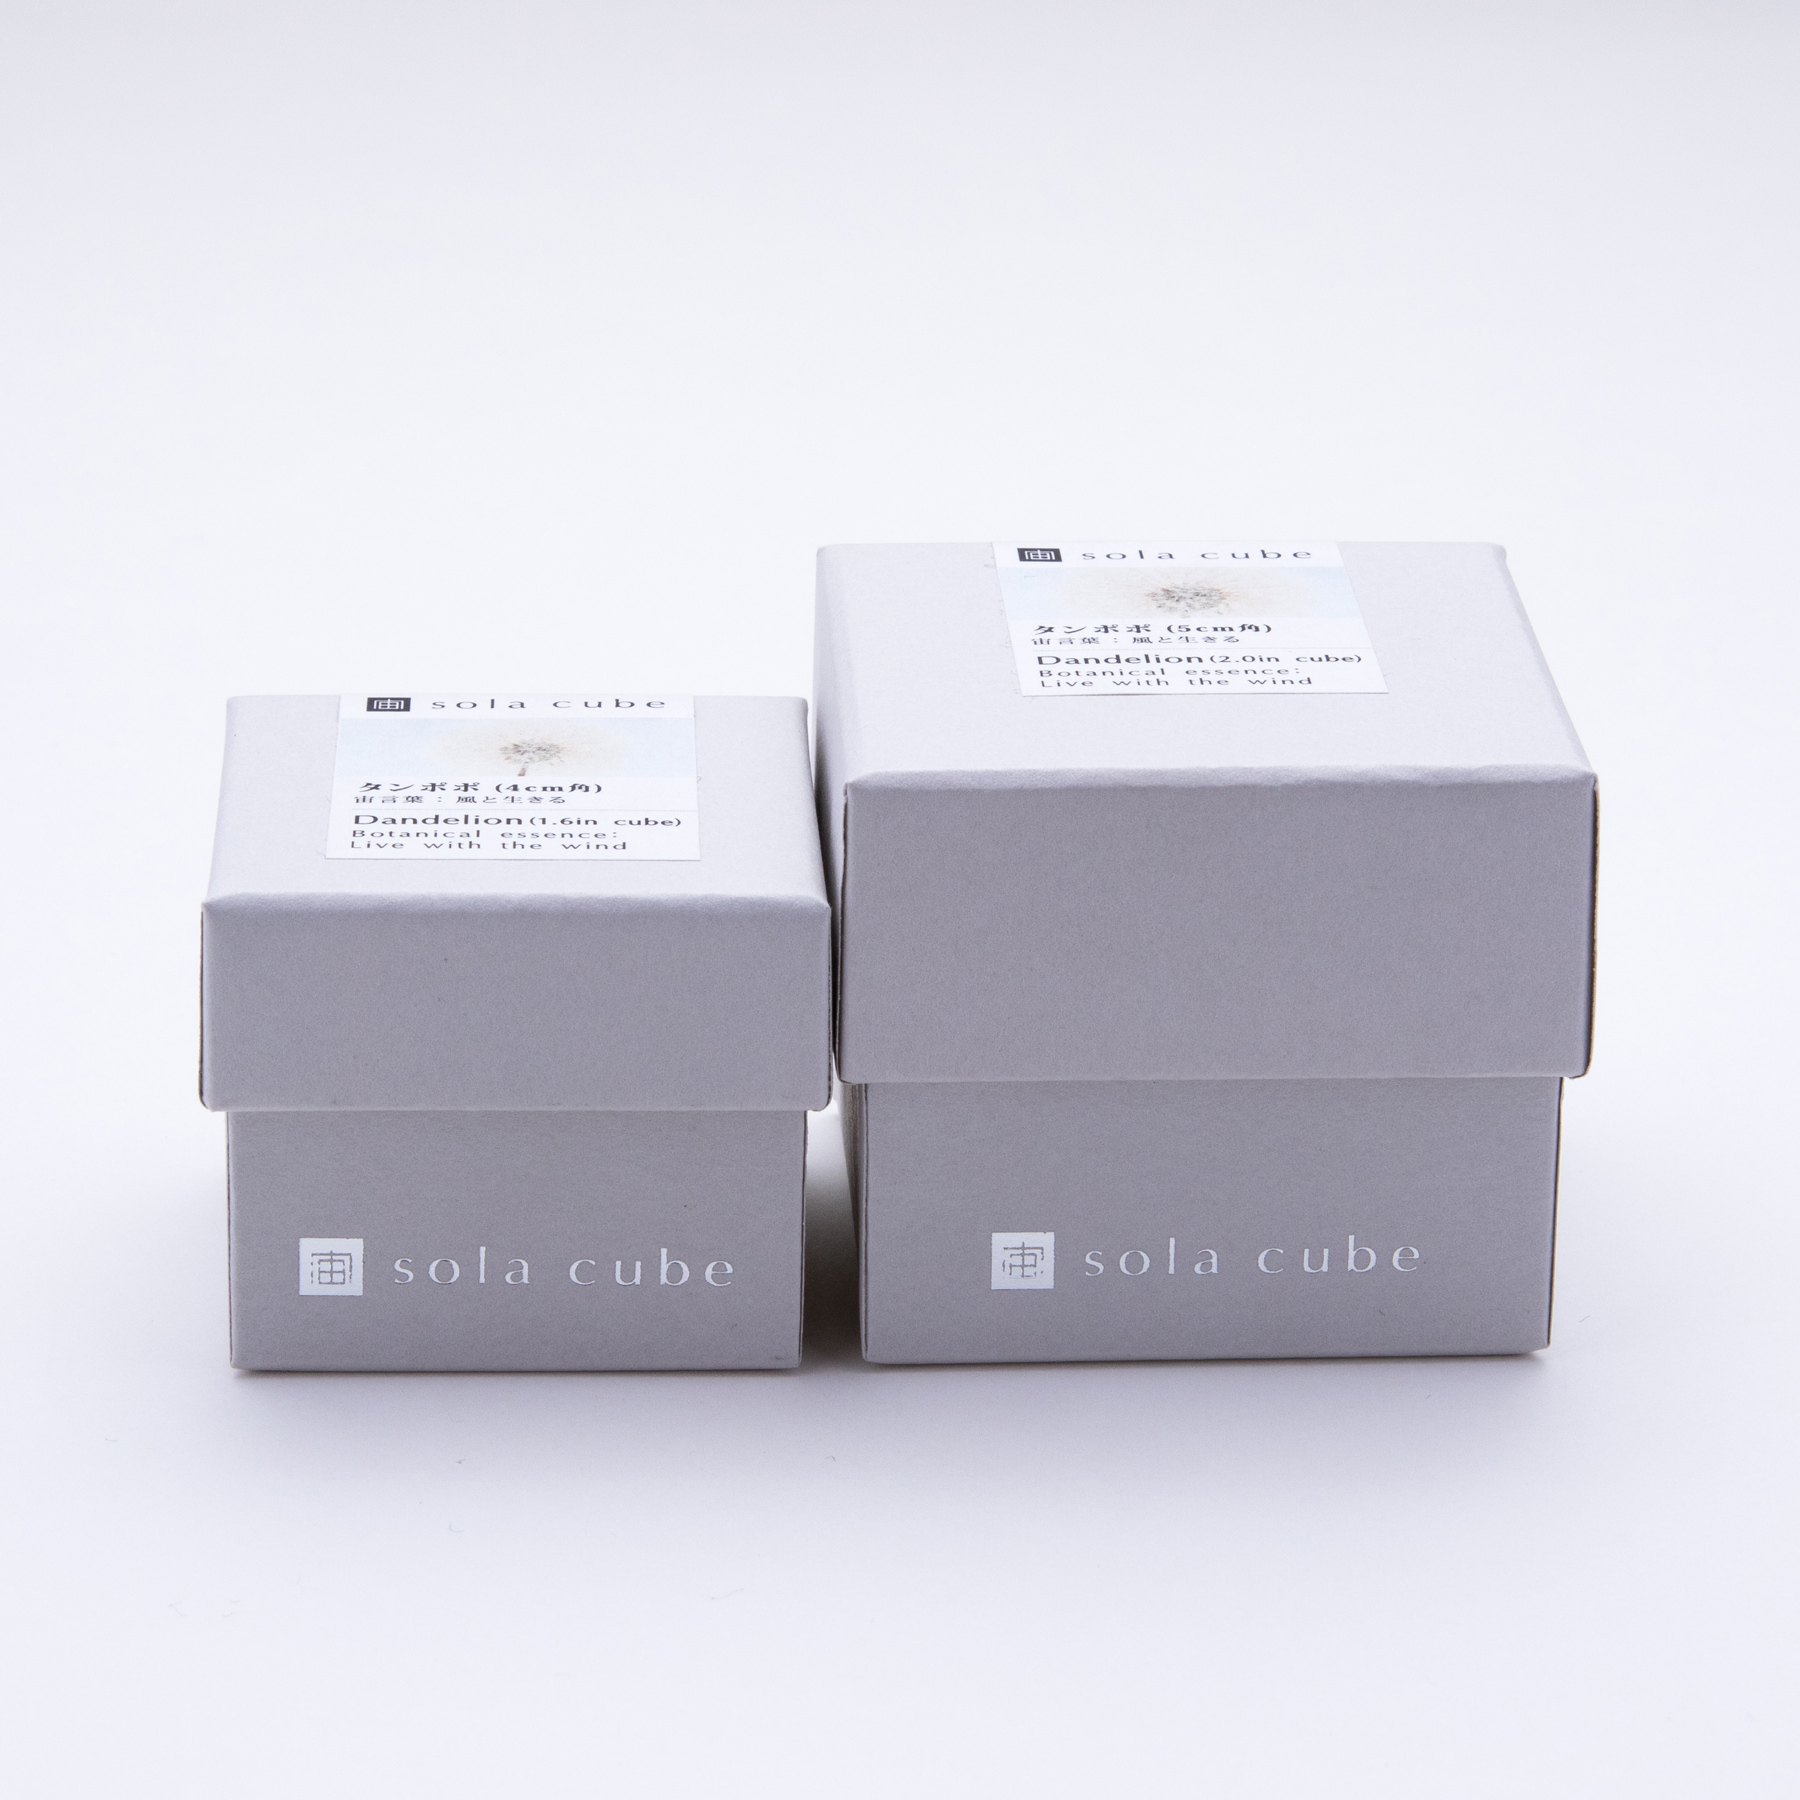 Sola cube パッケージ - 各種１つ200円(税抜)